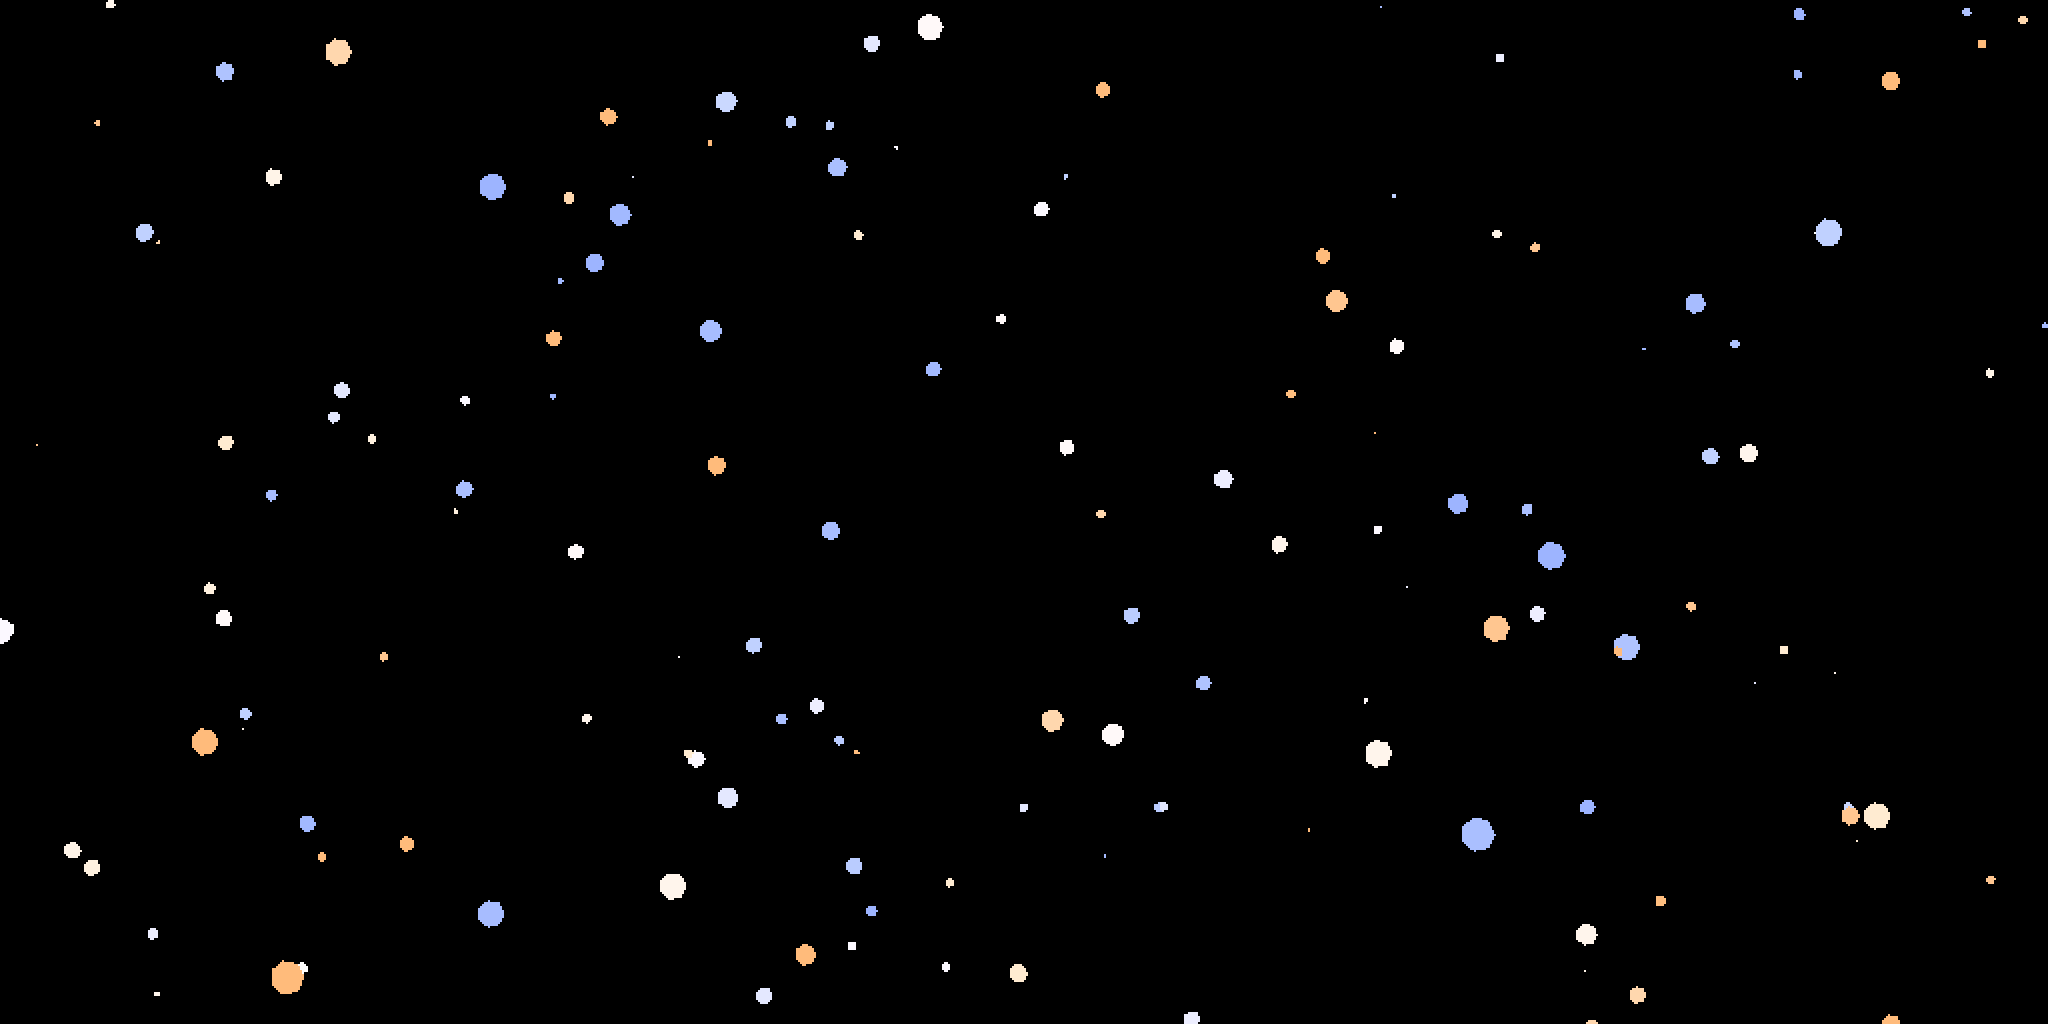 pixel-experiments/starfield at master · peterhellberg/pixel ...